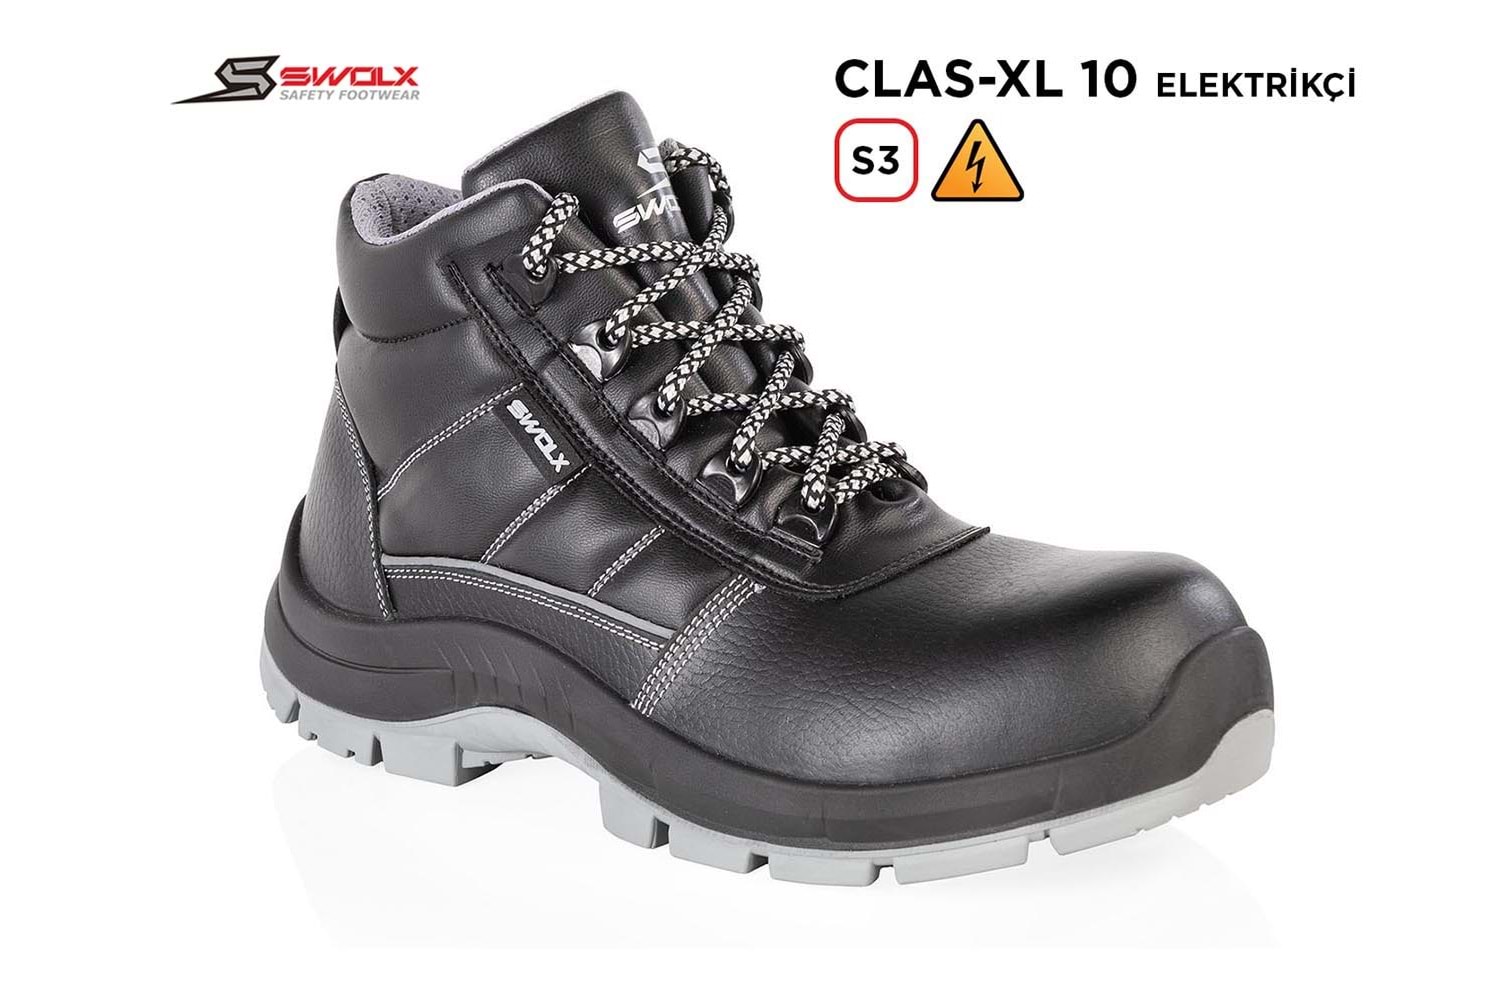 Swolx İş Ayakkabısı - Clas-Xl 10 S3 Elektrikçi - 43